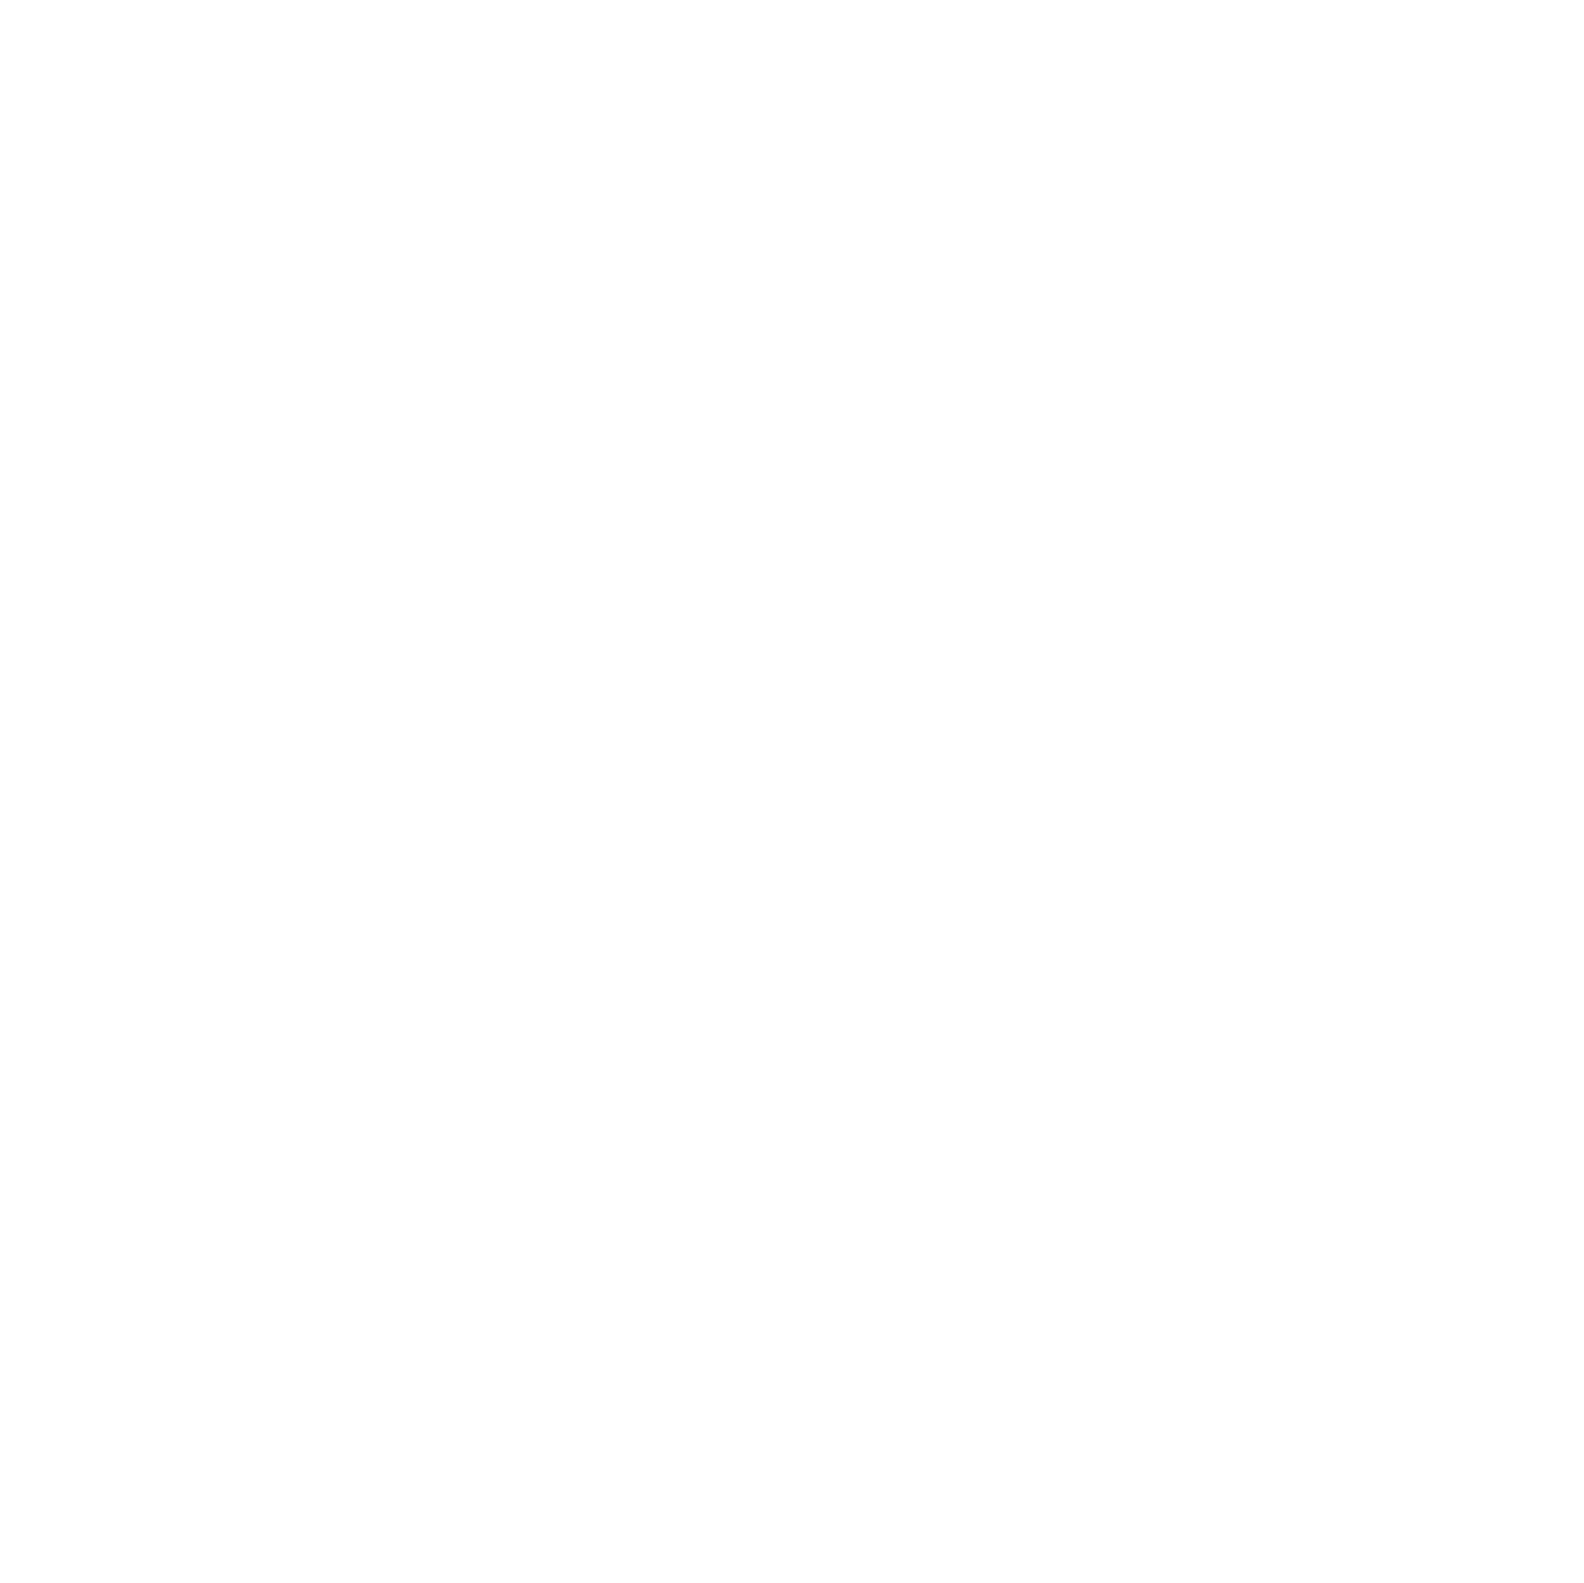 Colruyt logo pour fonds sombres (PNG transparent)